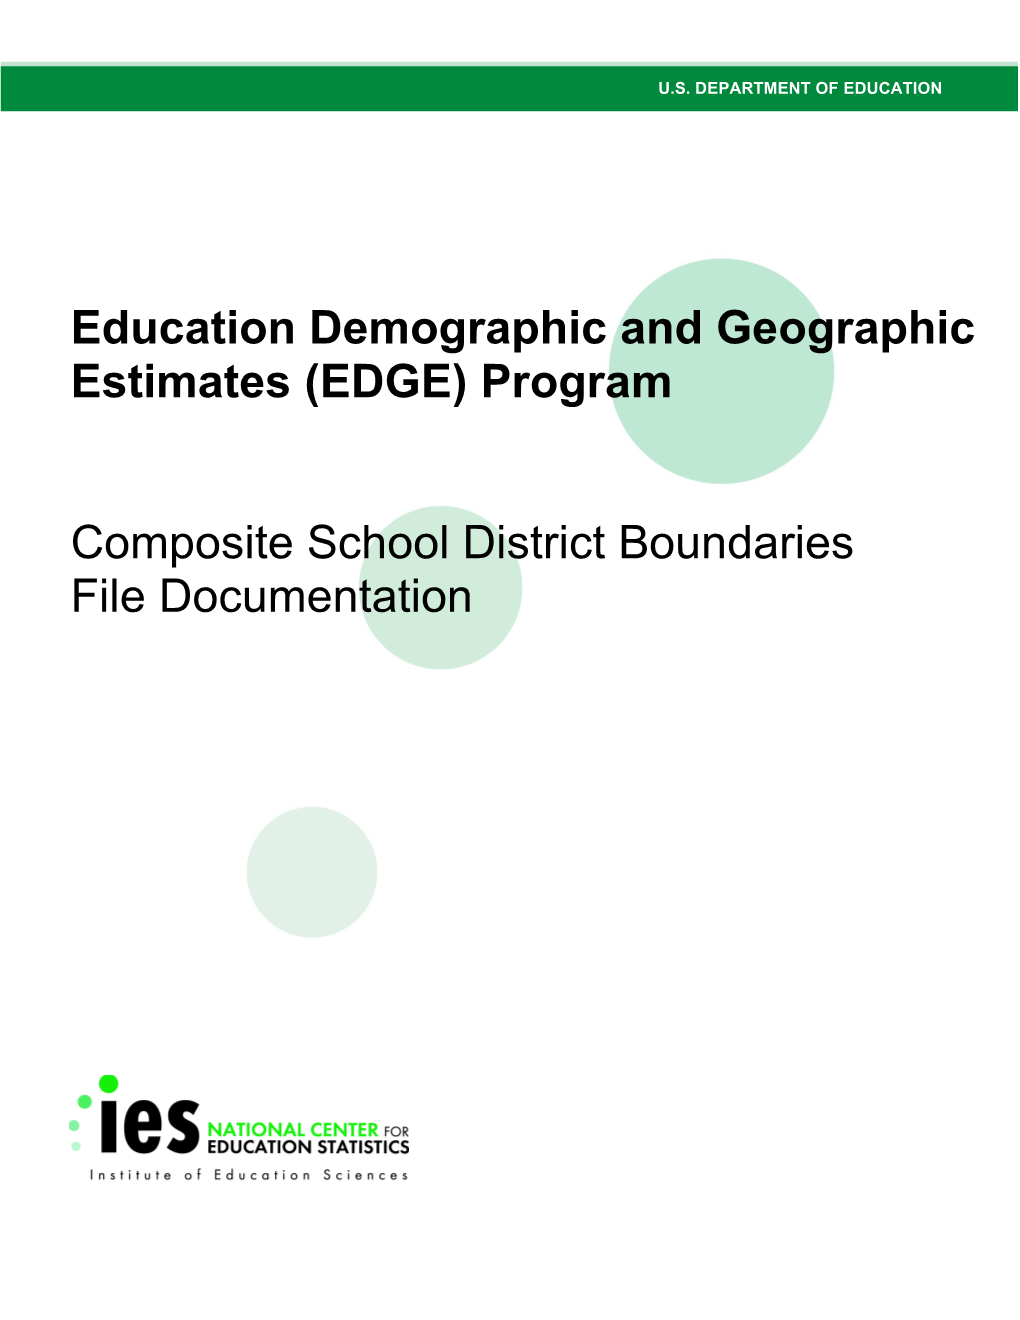 Program Composite School District Boundaries File Documentation